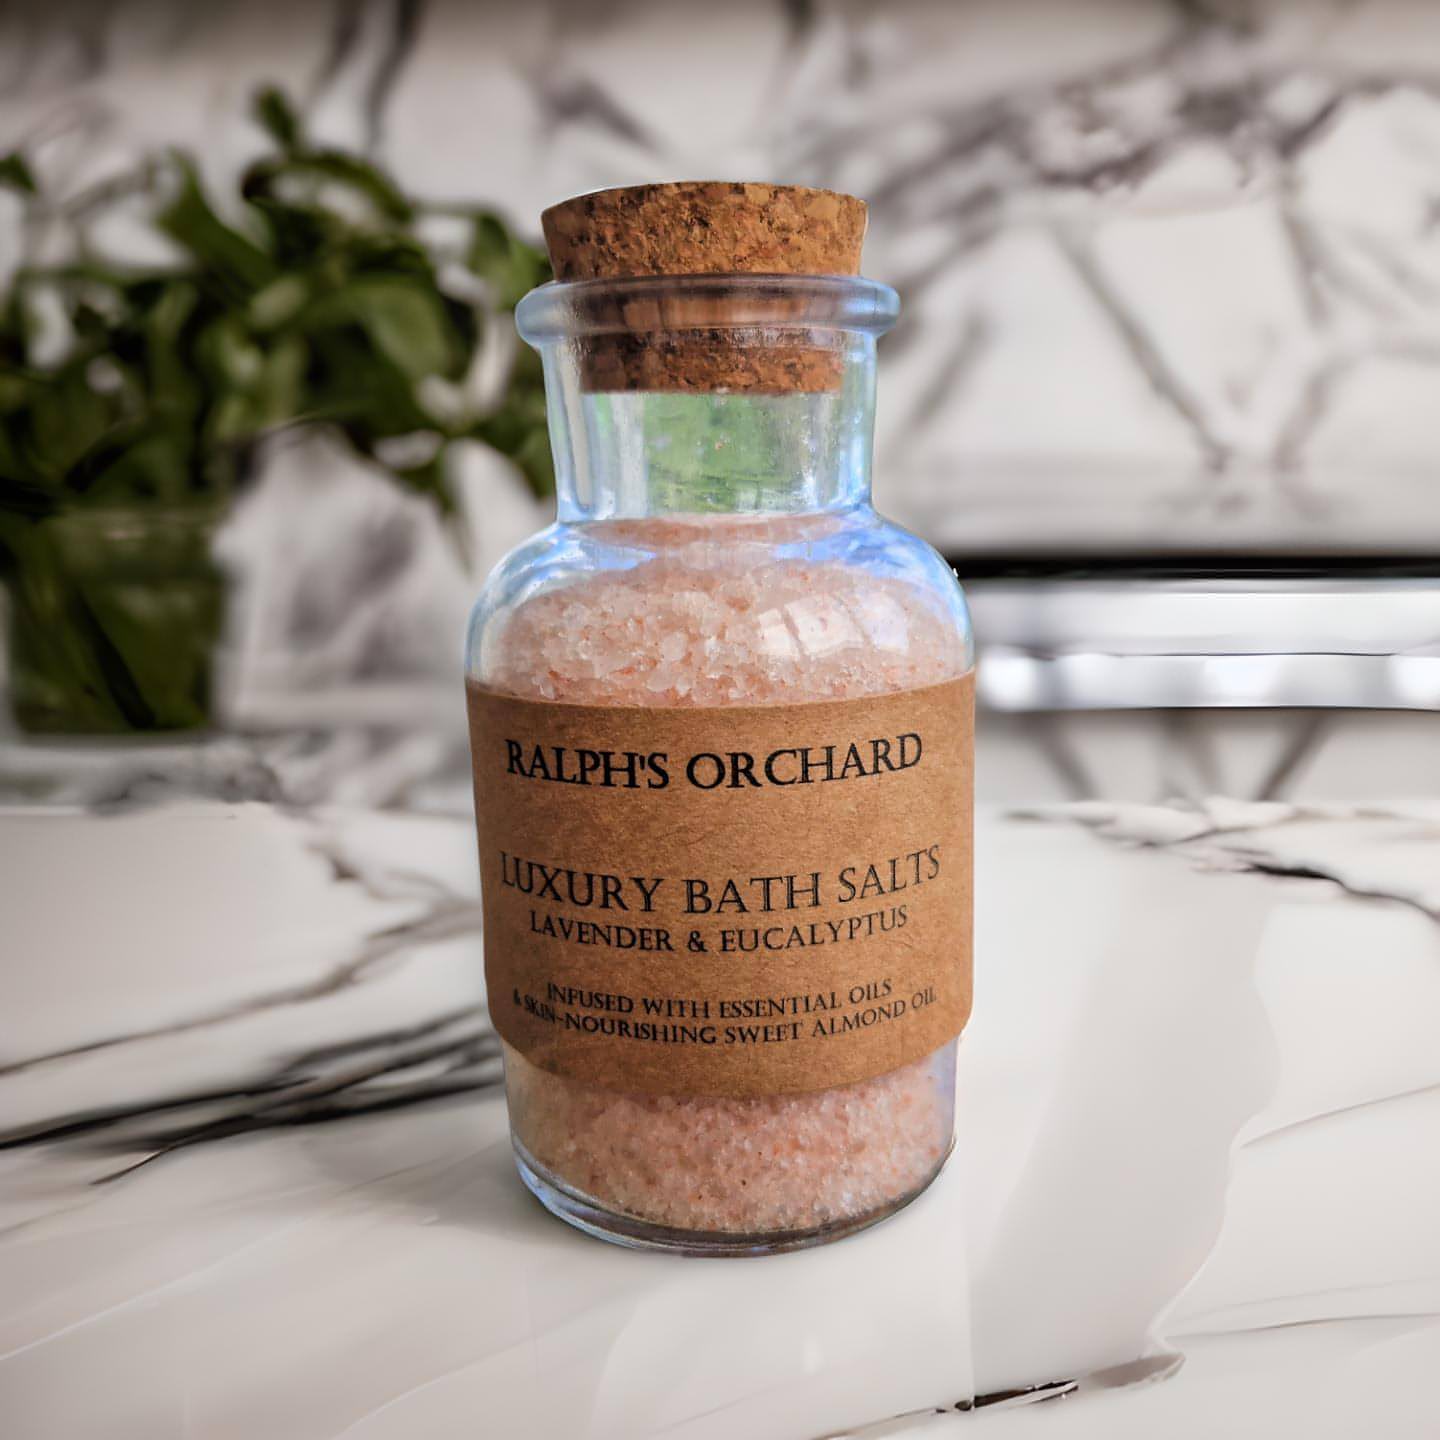 Lavender & Eucalyptus luxury bath salts